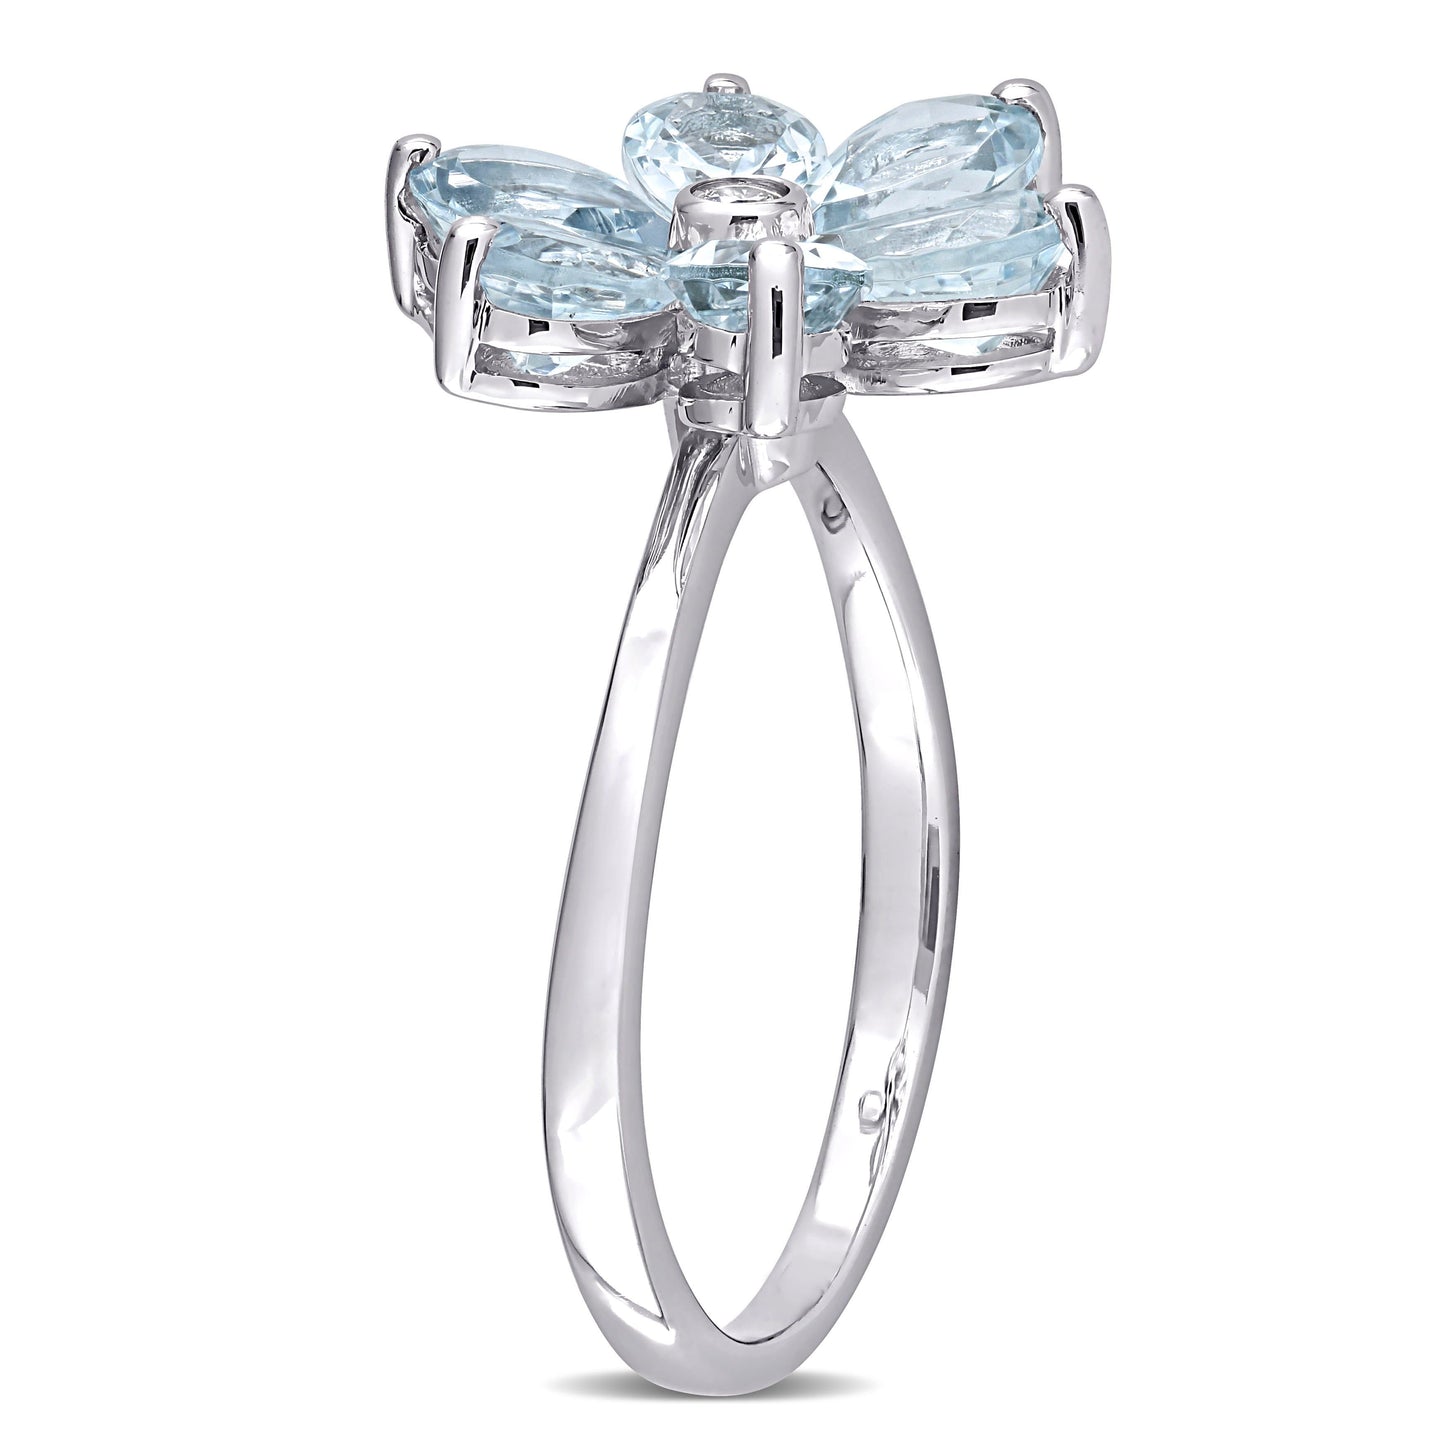 Diamond & Aquamarine Flower Ring in 14k White Gold